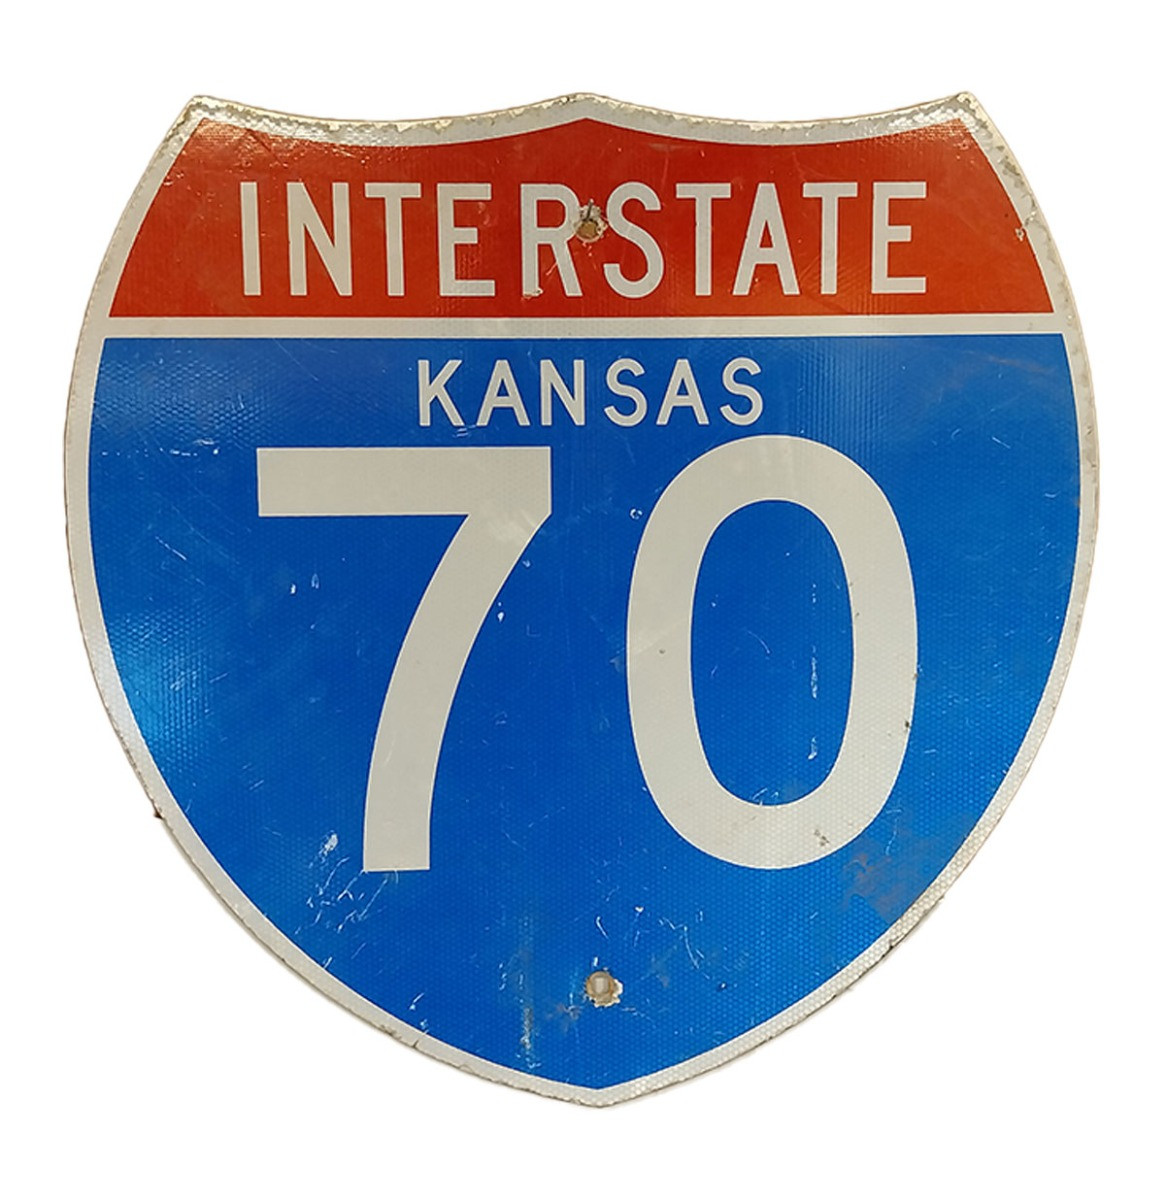 Kansas Interstate 70 Origineel Amerikaans Verkeersbord - 61 x 61 cm